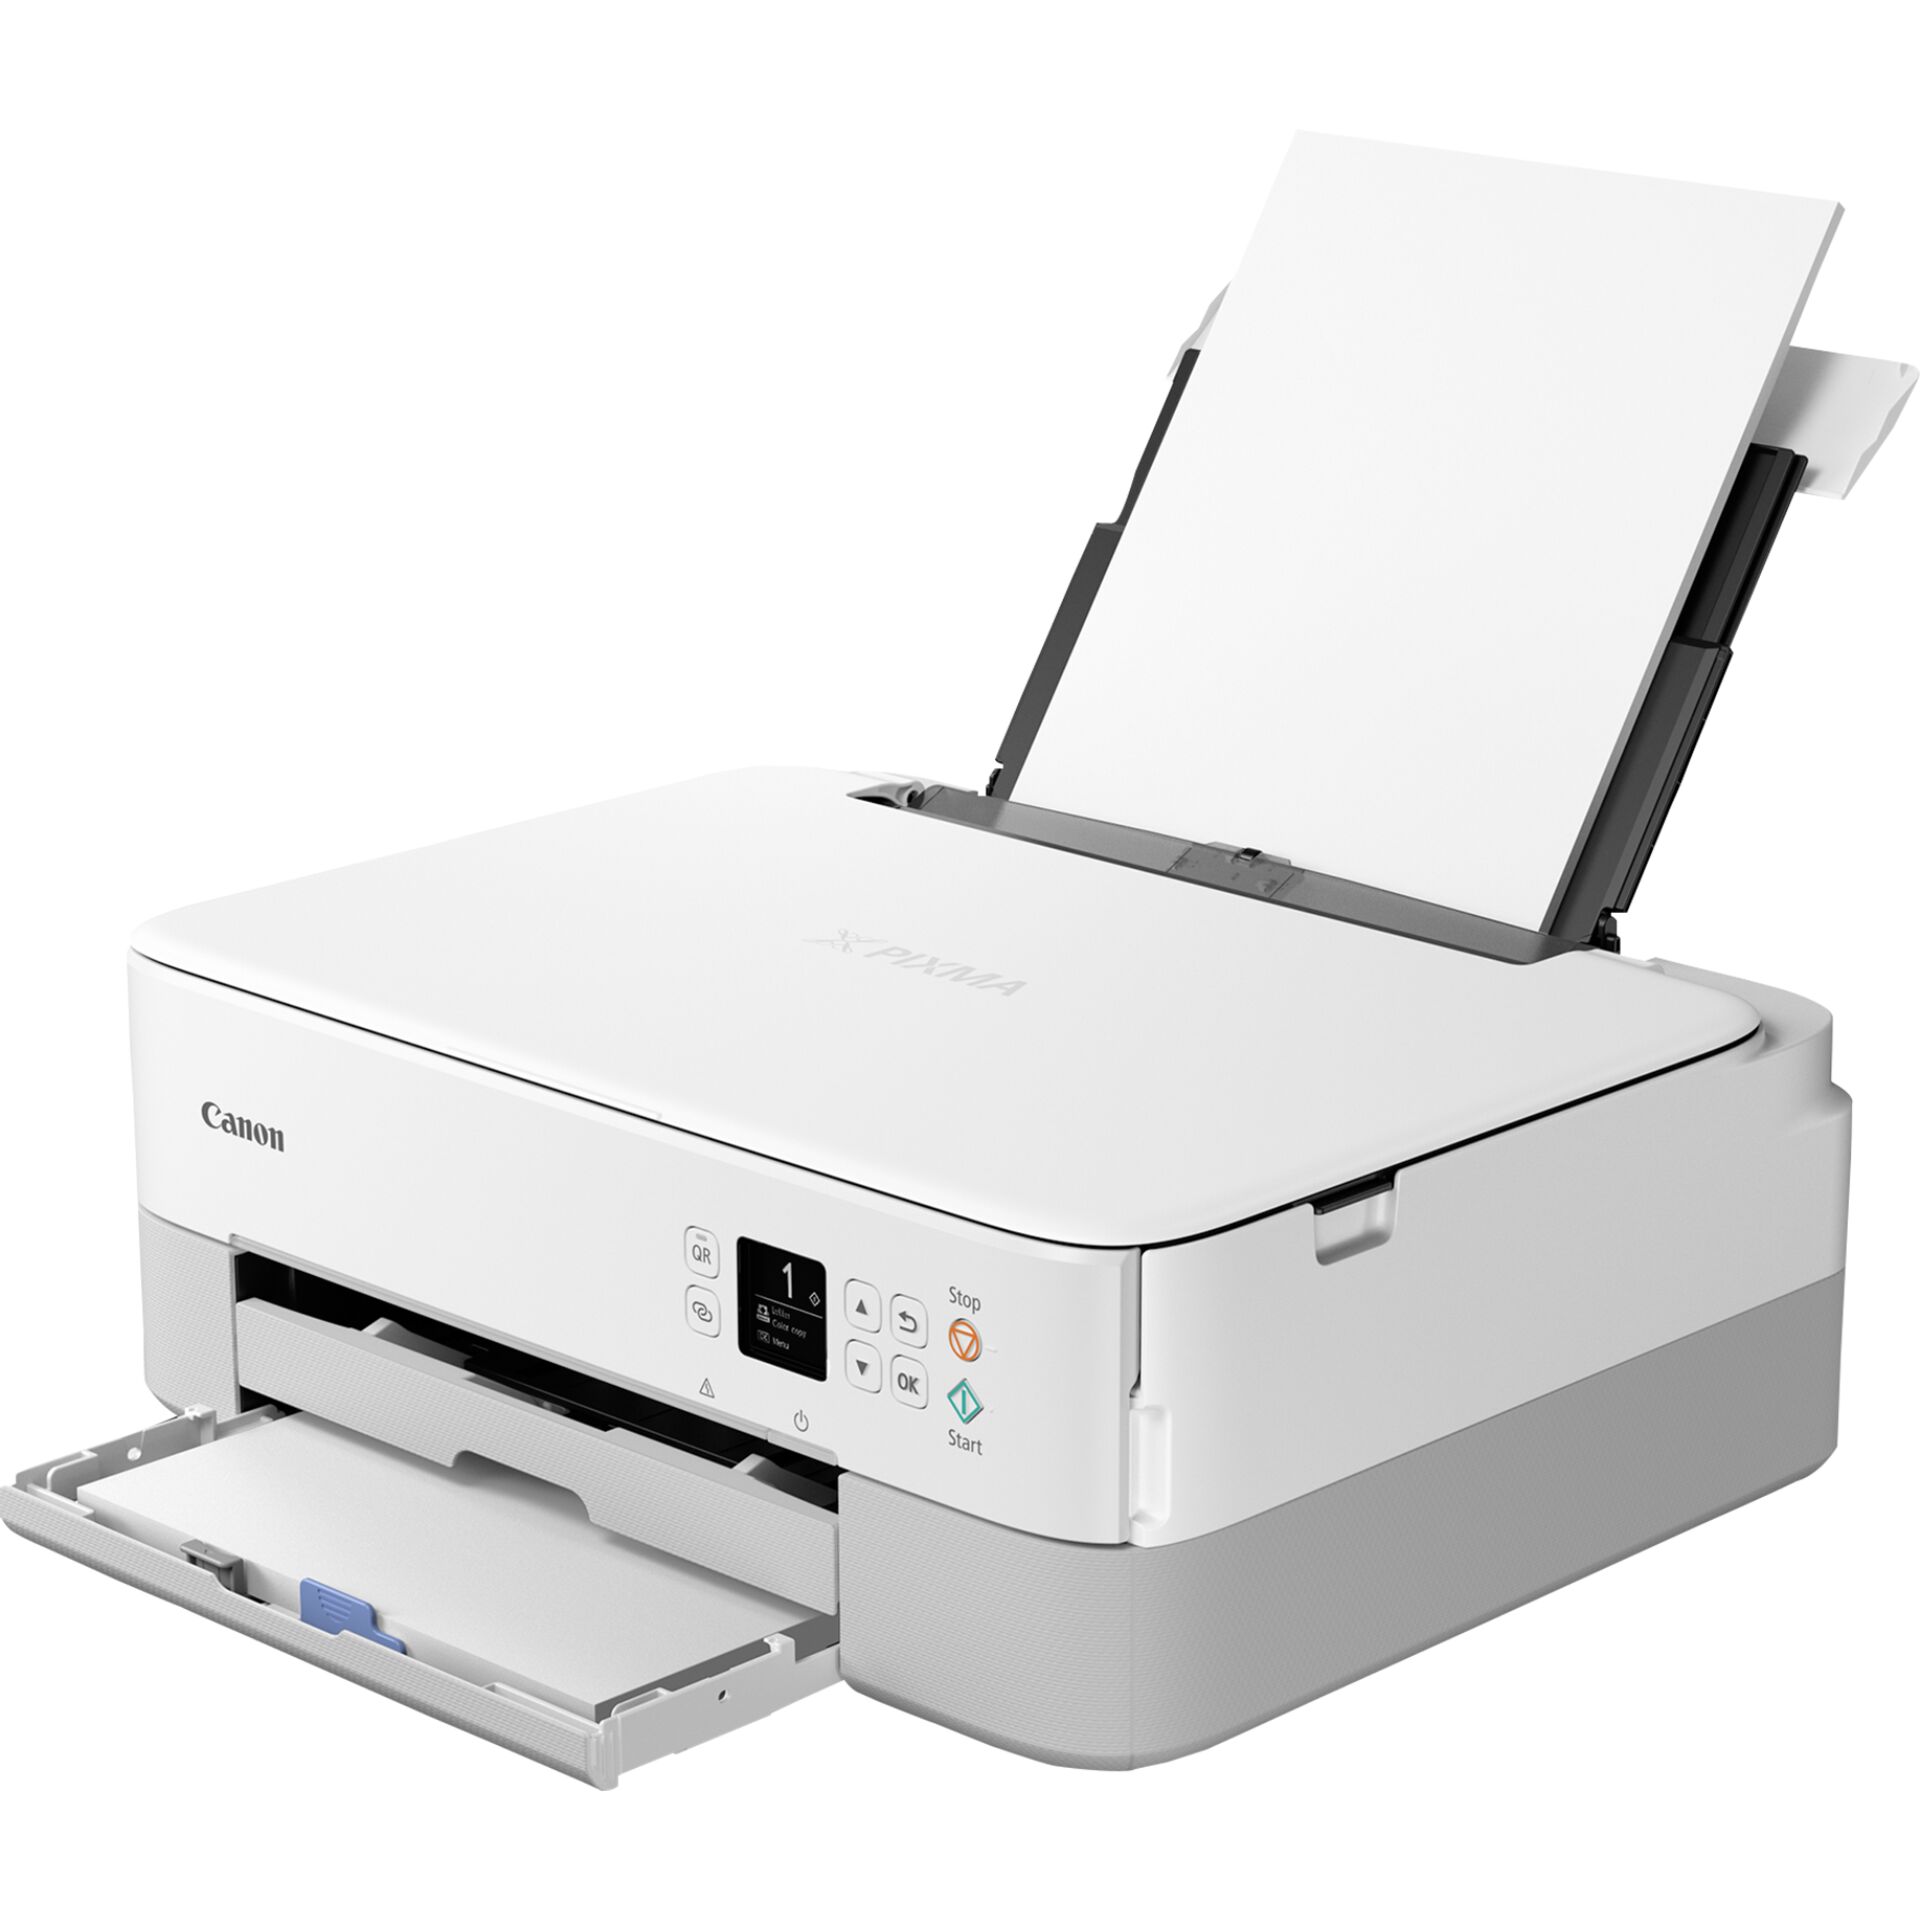 Canon PIXMA TS5351a weiß, WLAN, Tinte, mehrfarbig- Multifunktionsgerät, Drucker/Scanner/Kopierer